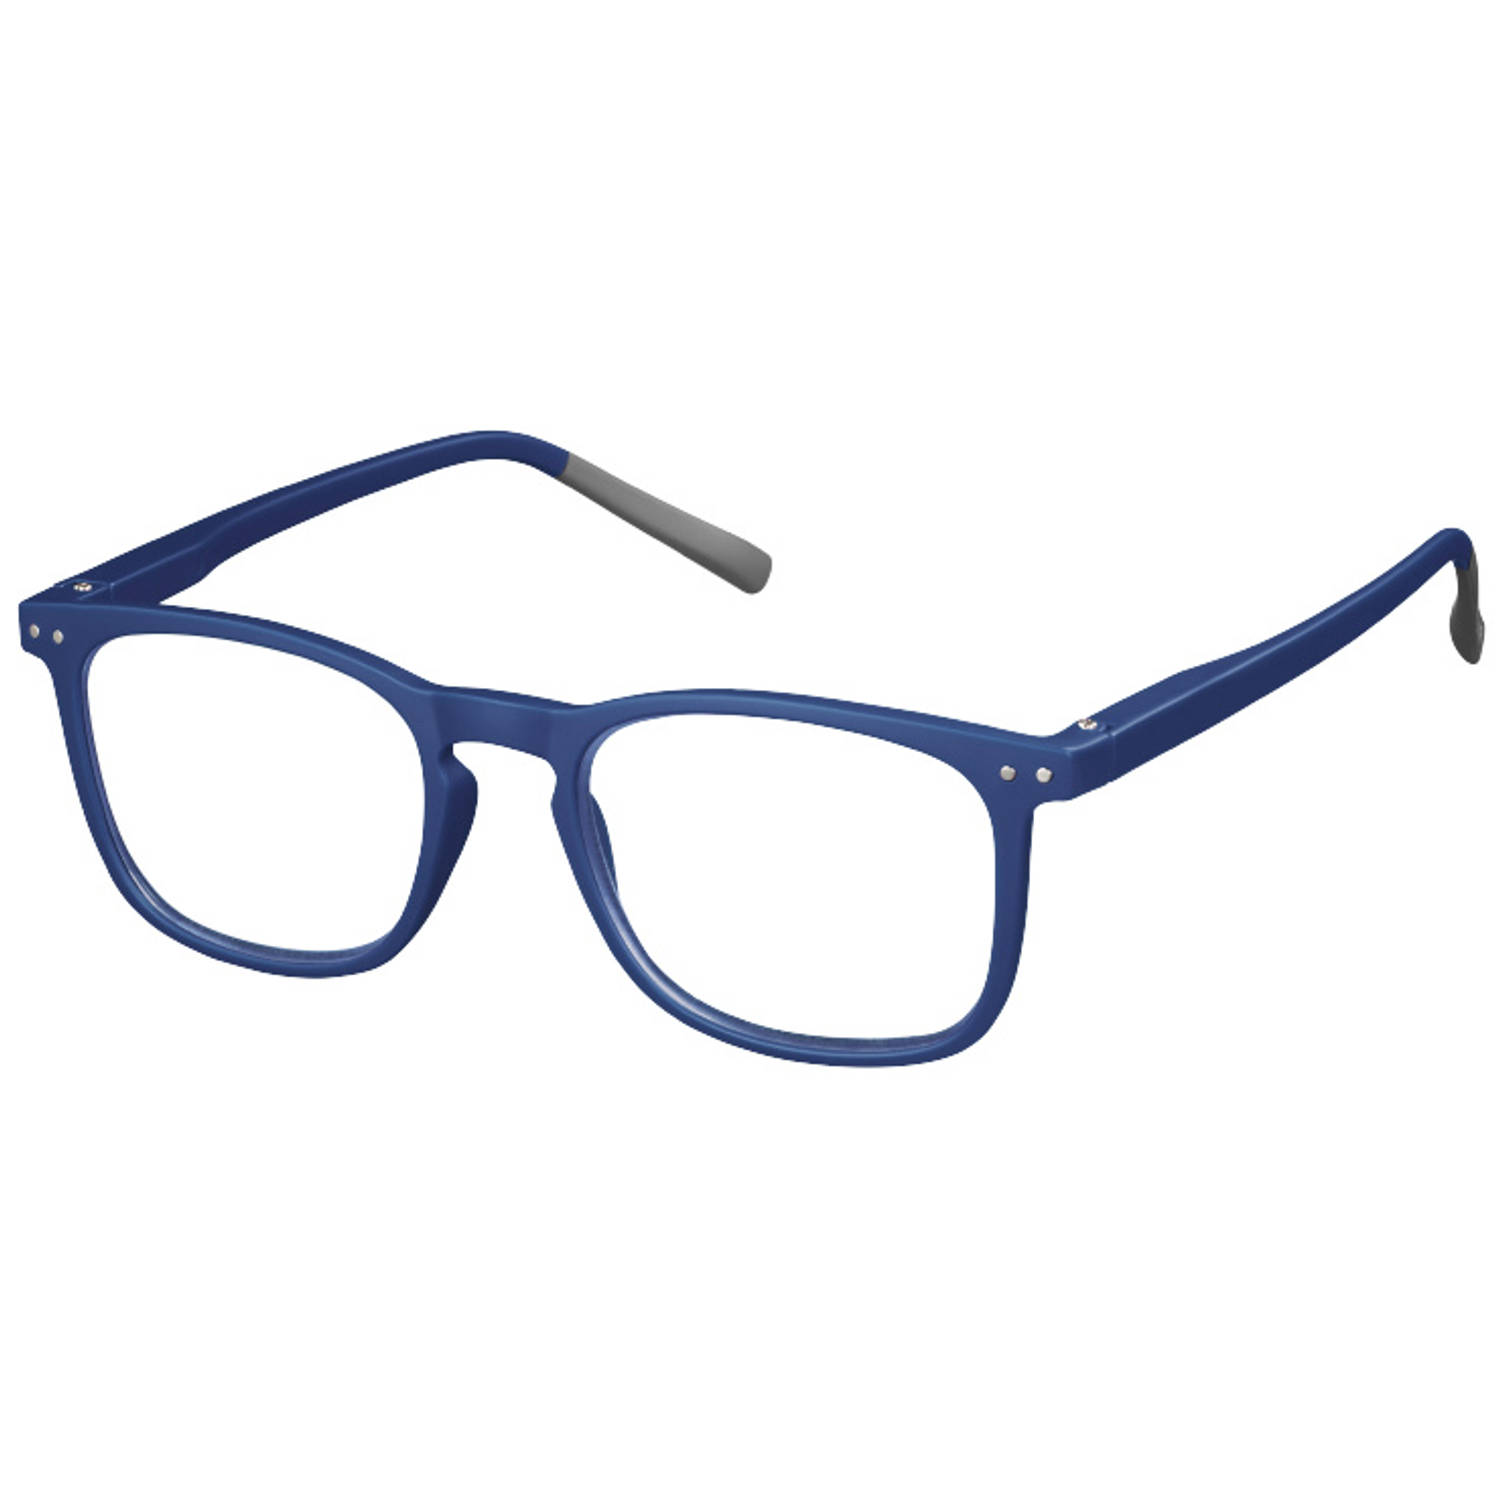 Solar Eyewear Leesbril Slr02 Unisex Acryl Donkerblauw Sterkte +1,00